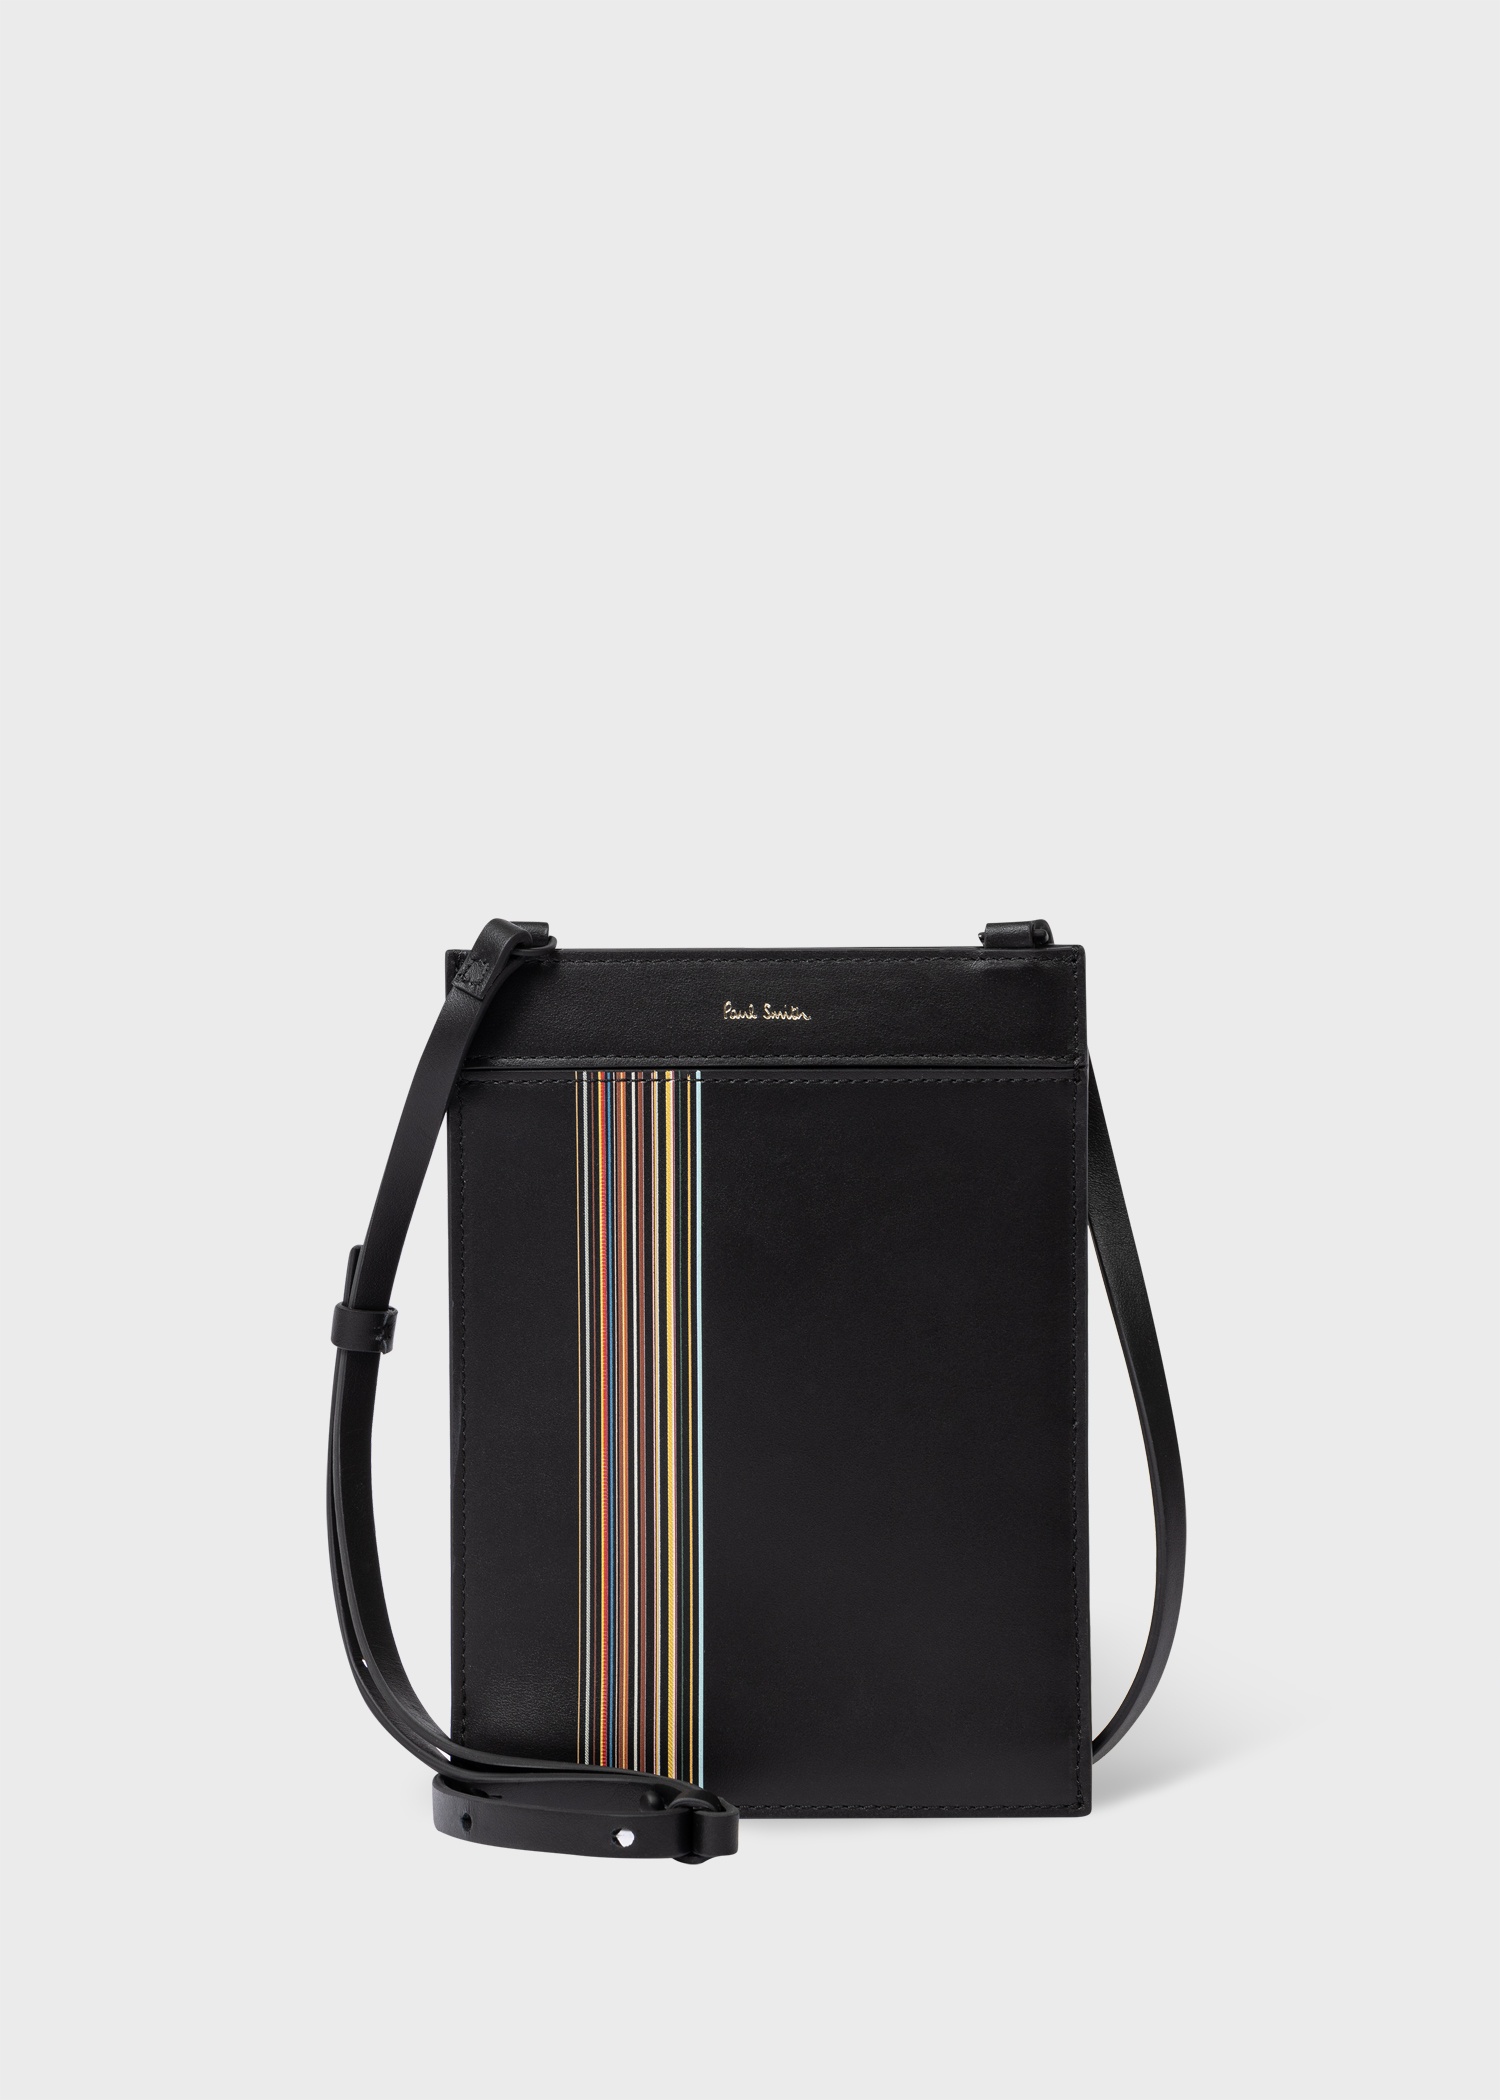 Paul Smith Black Leather 'Signature Stripe Block' Cross-Body Bag 